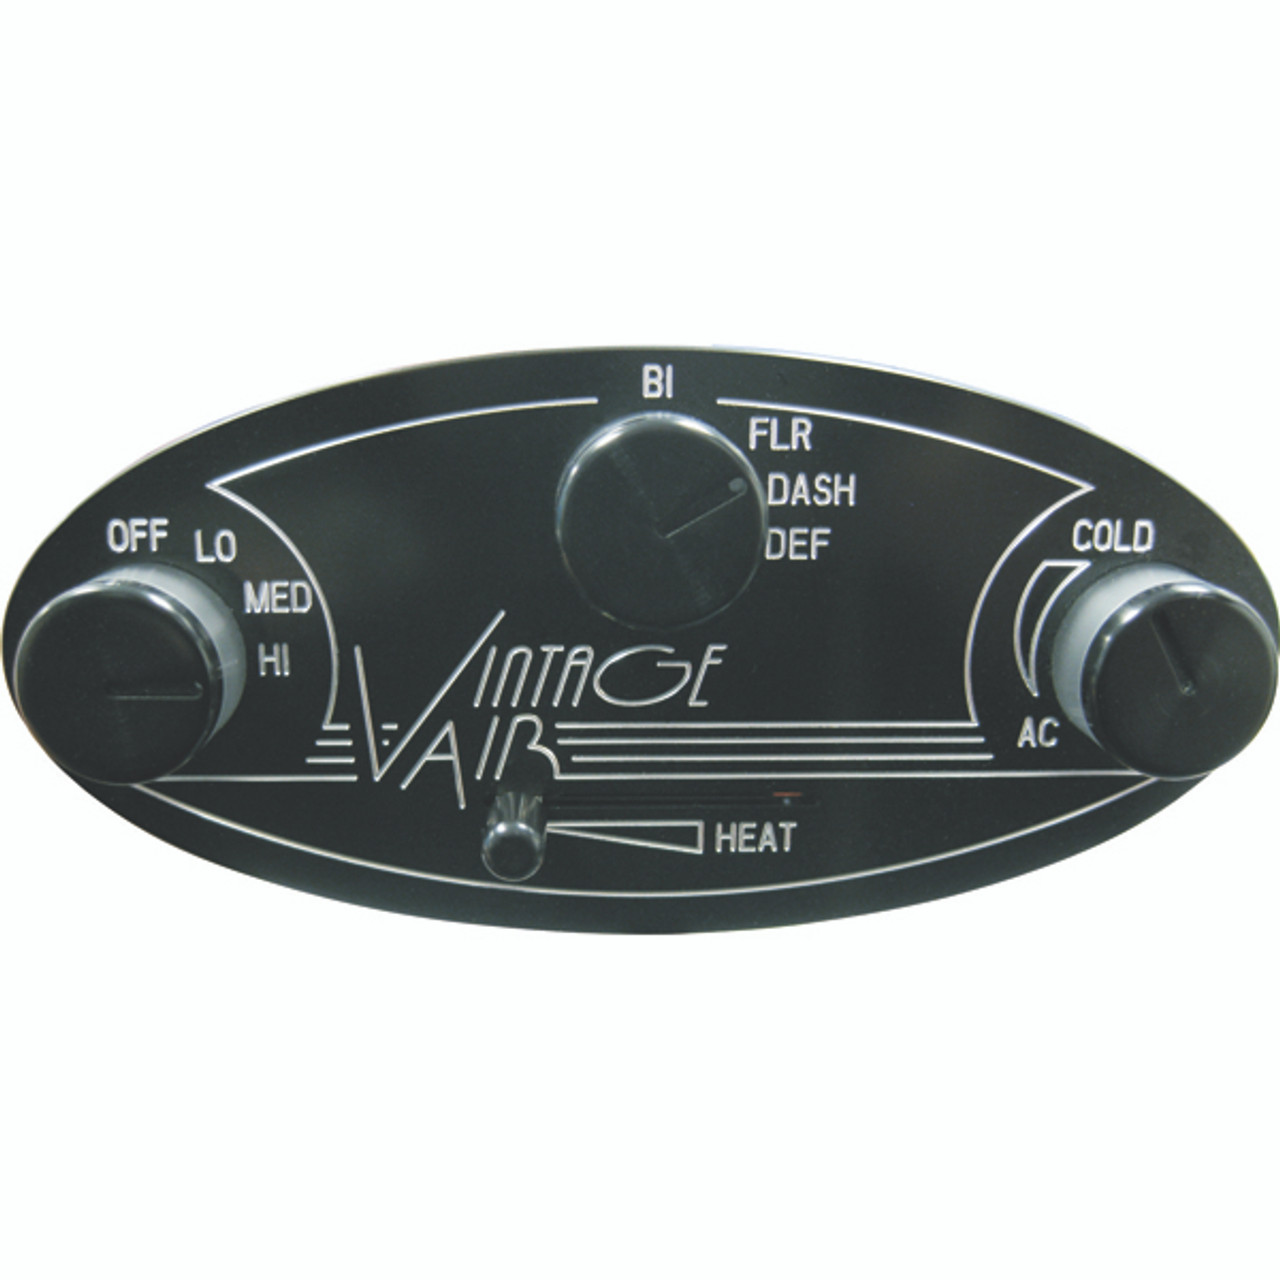 Vintage Air Gen II Streamline ProLine™  Oval Control Panel w/ Black Anodized Finish